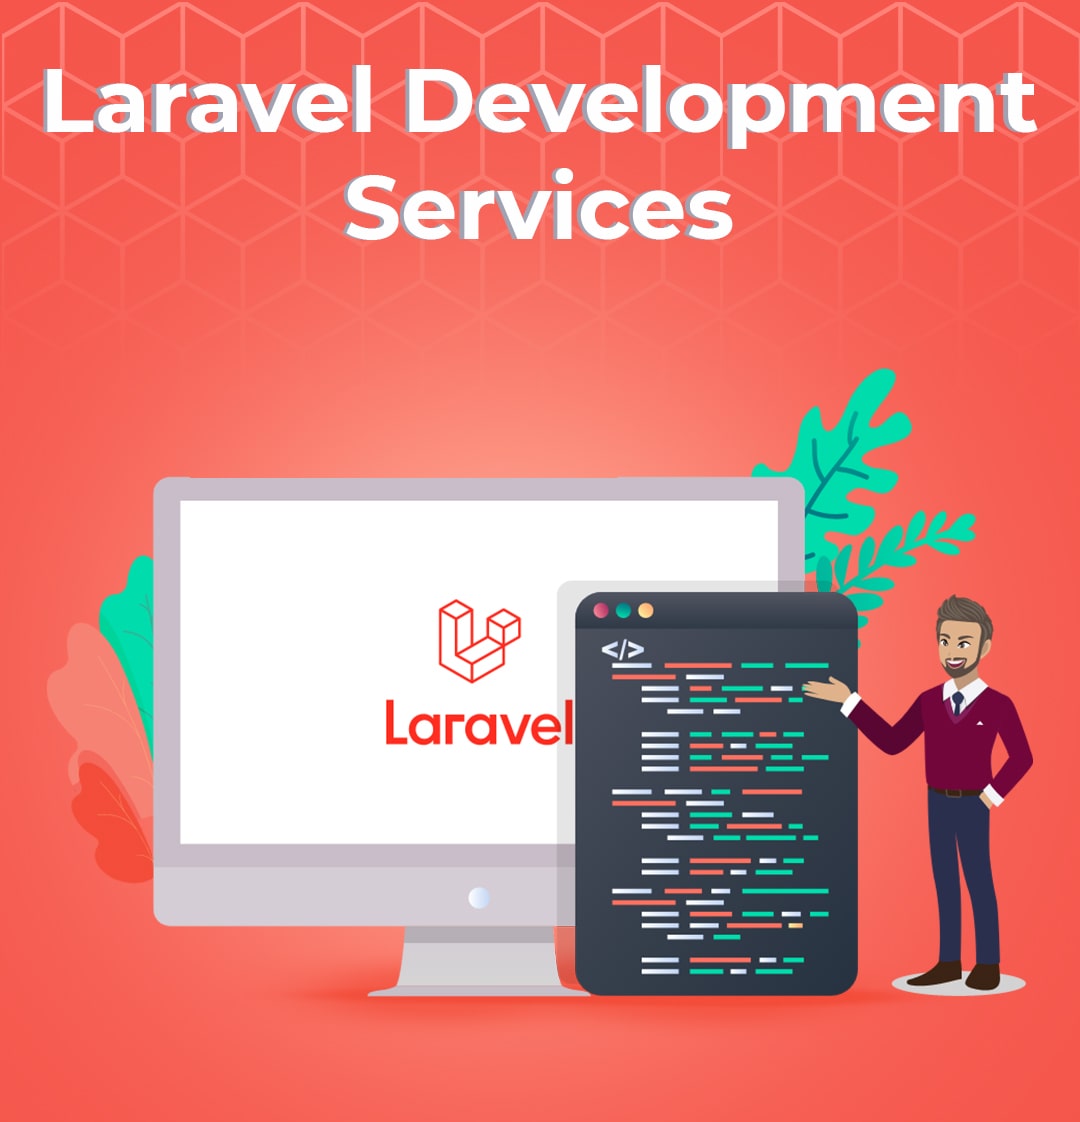 laravel_development_services-min.jpg